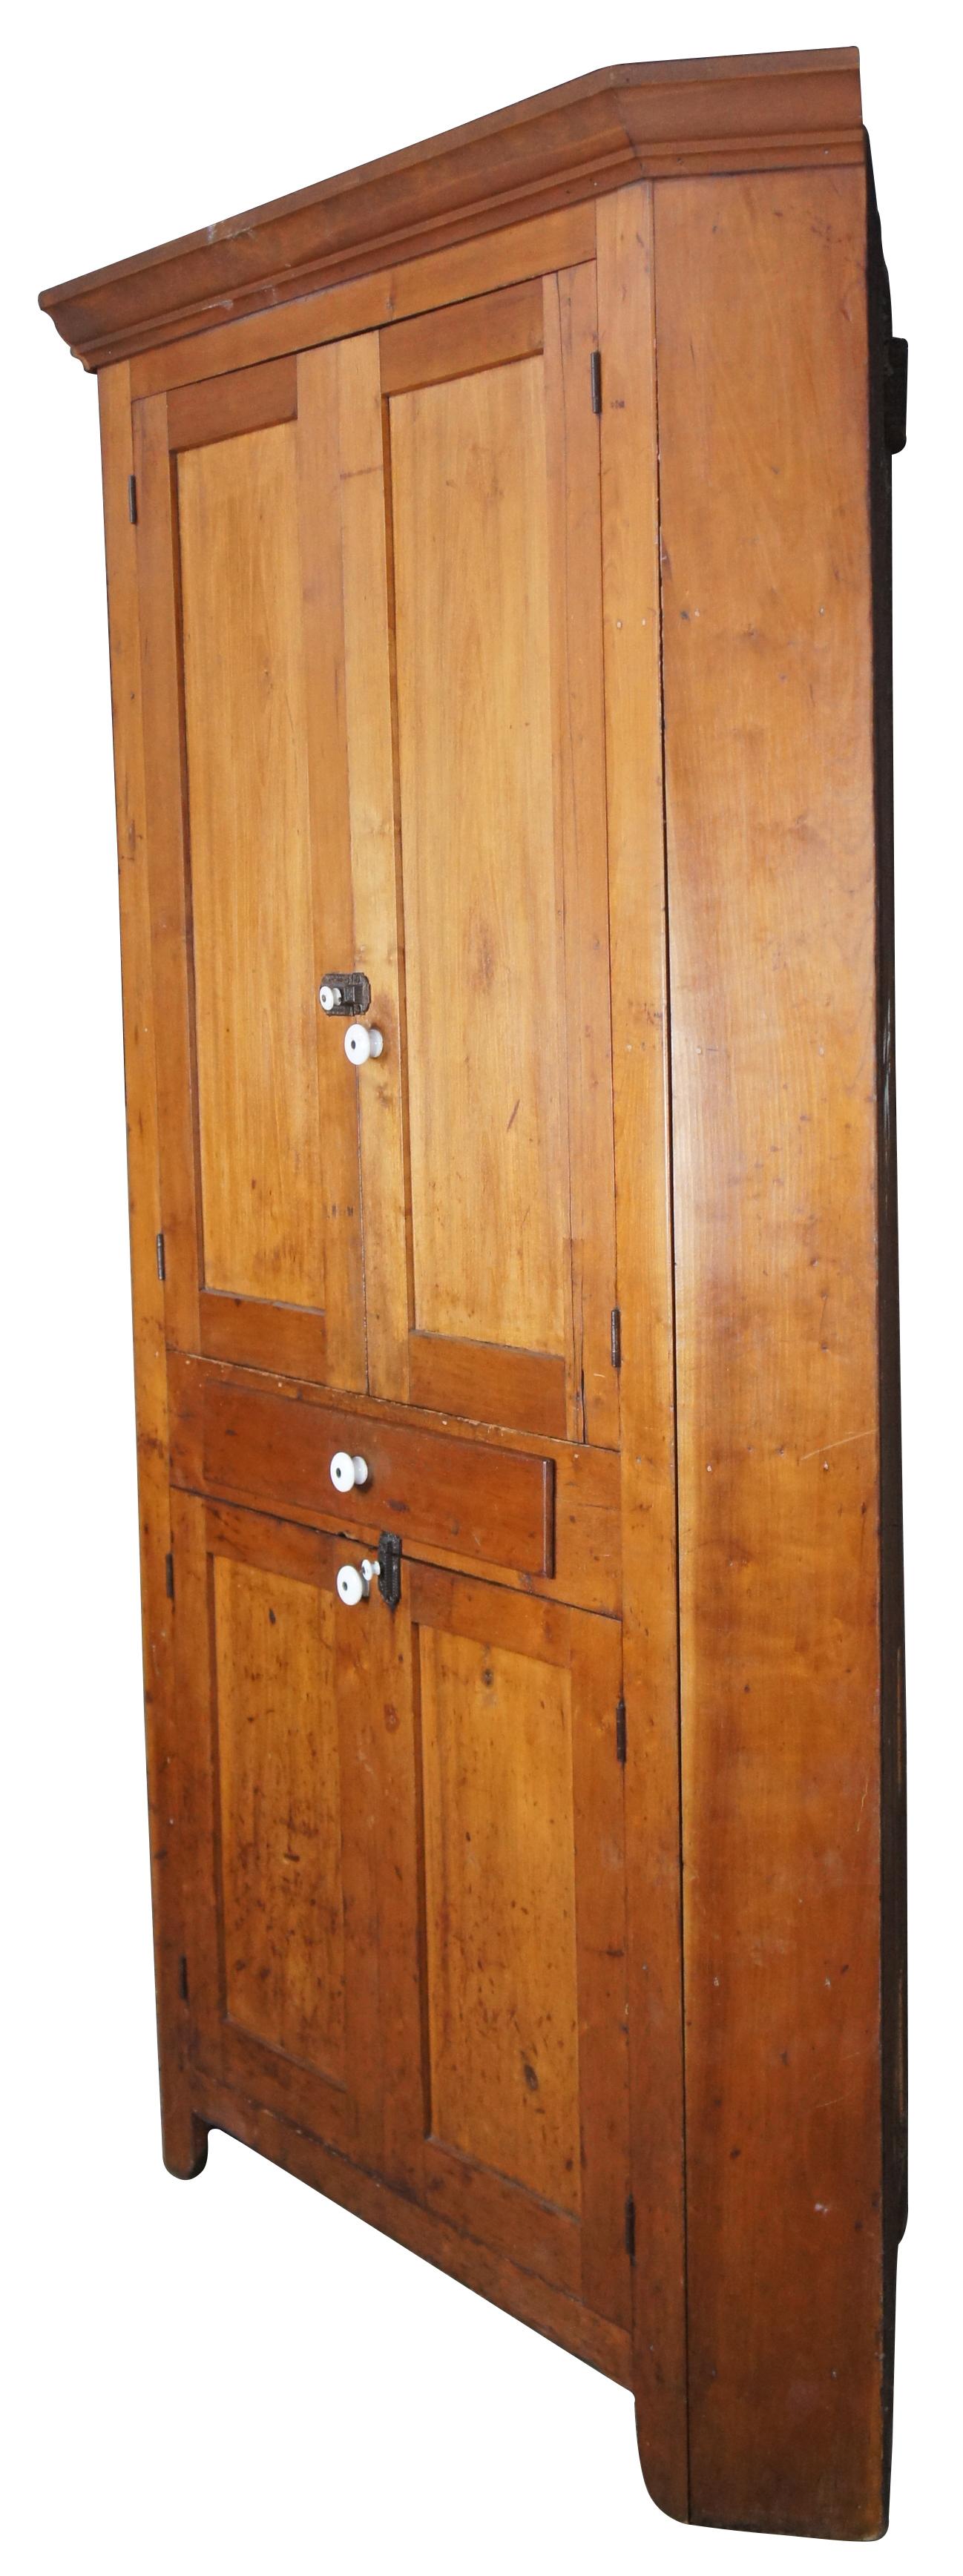 American Classical Antique 19th C. American Rustic Distressed Maple Corner Cabinet Cupboard